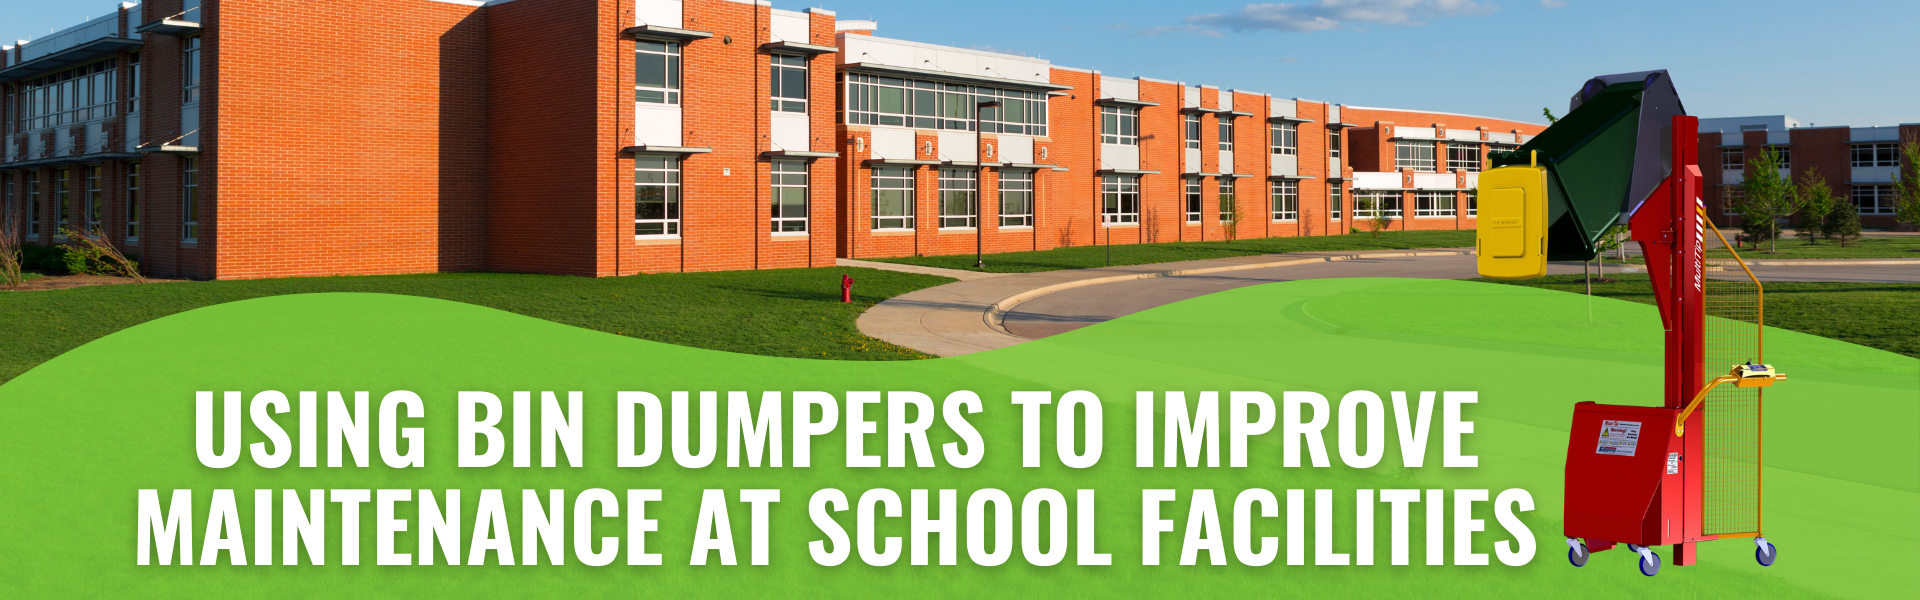 Using Bin Dumpers to Improve Maintenance at School Facilities